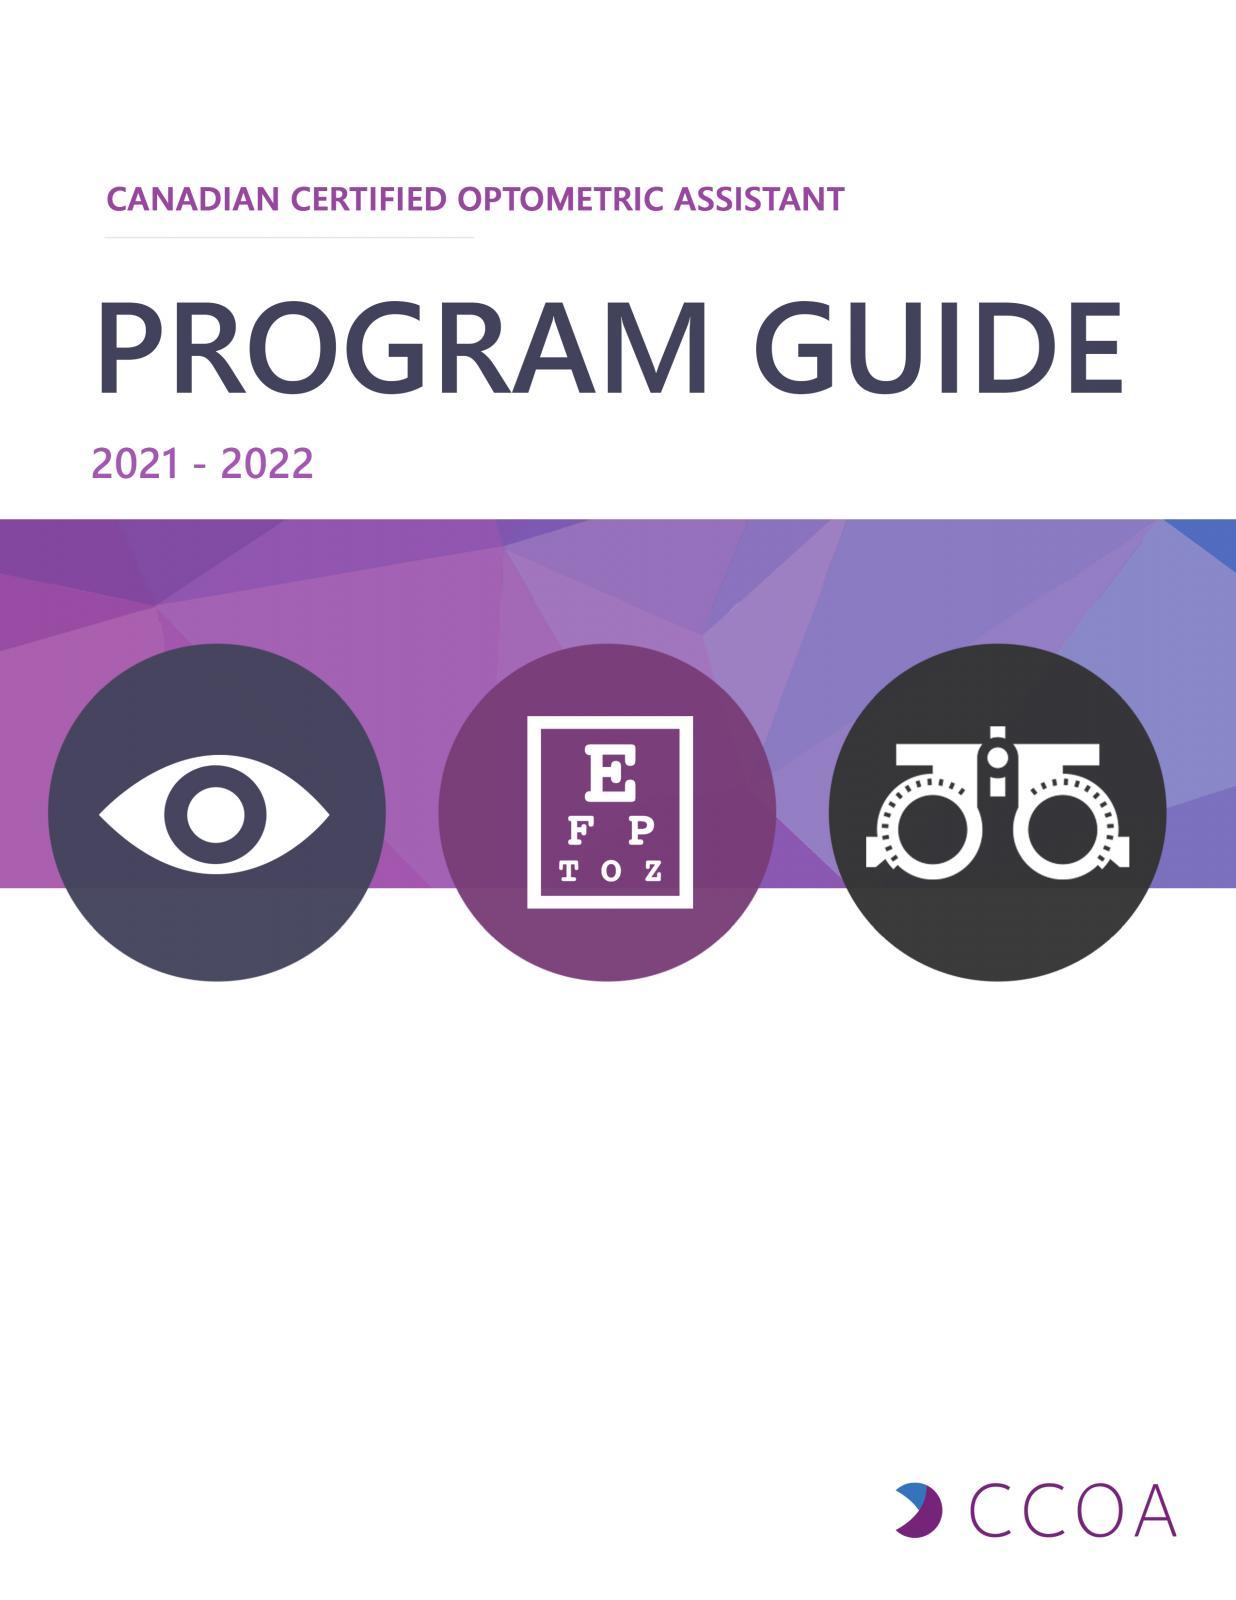 CCOA Program Guide Cover